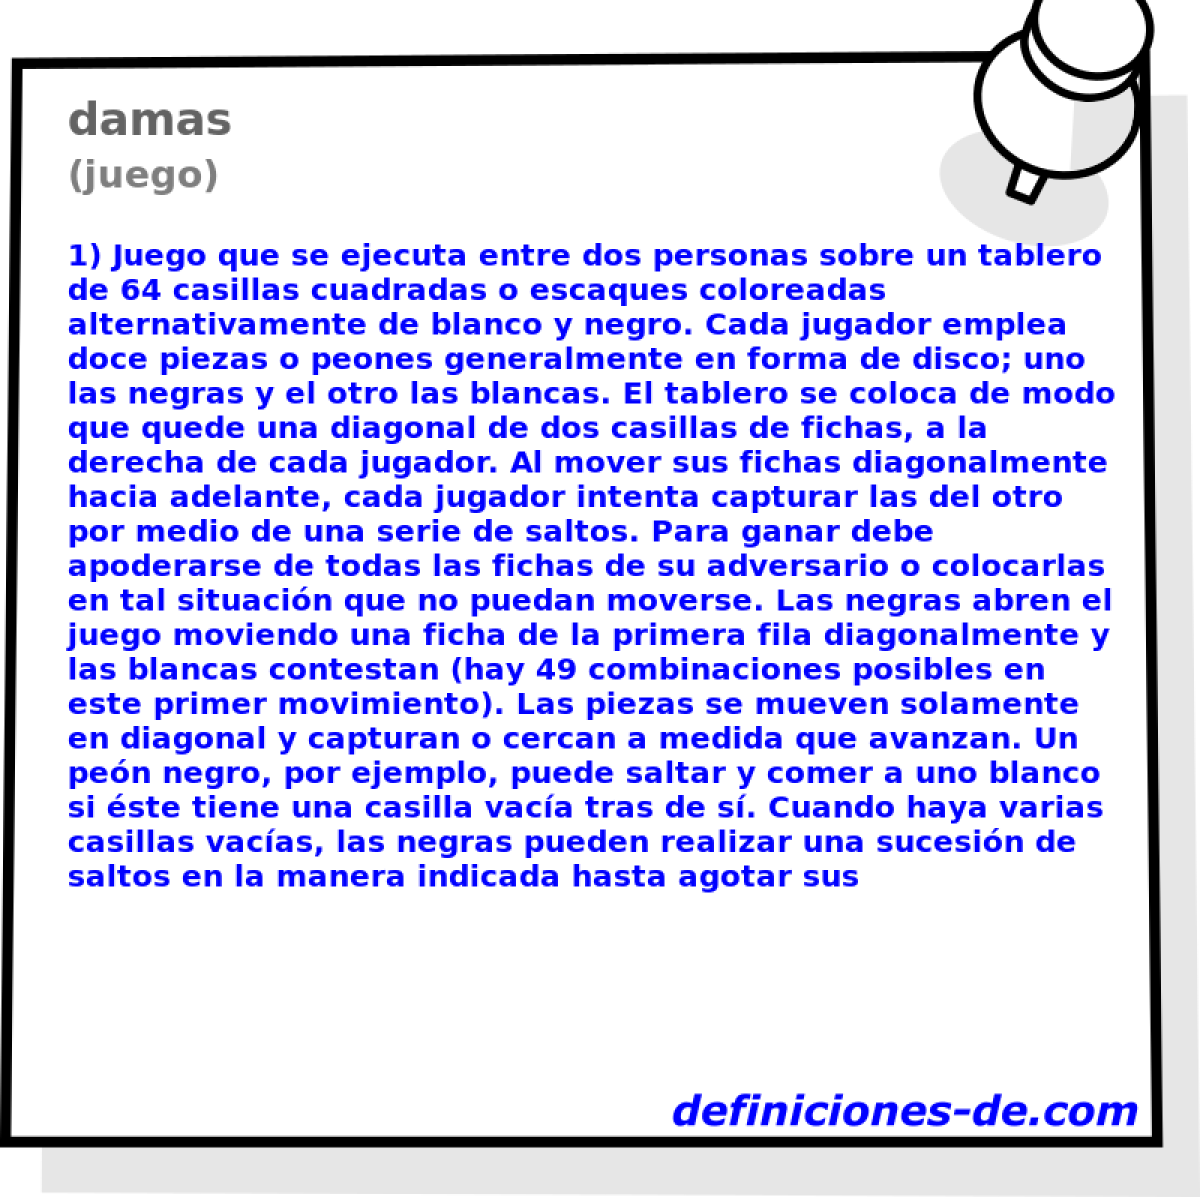 damas (juego)